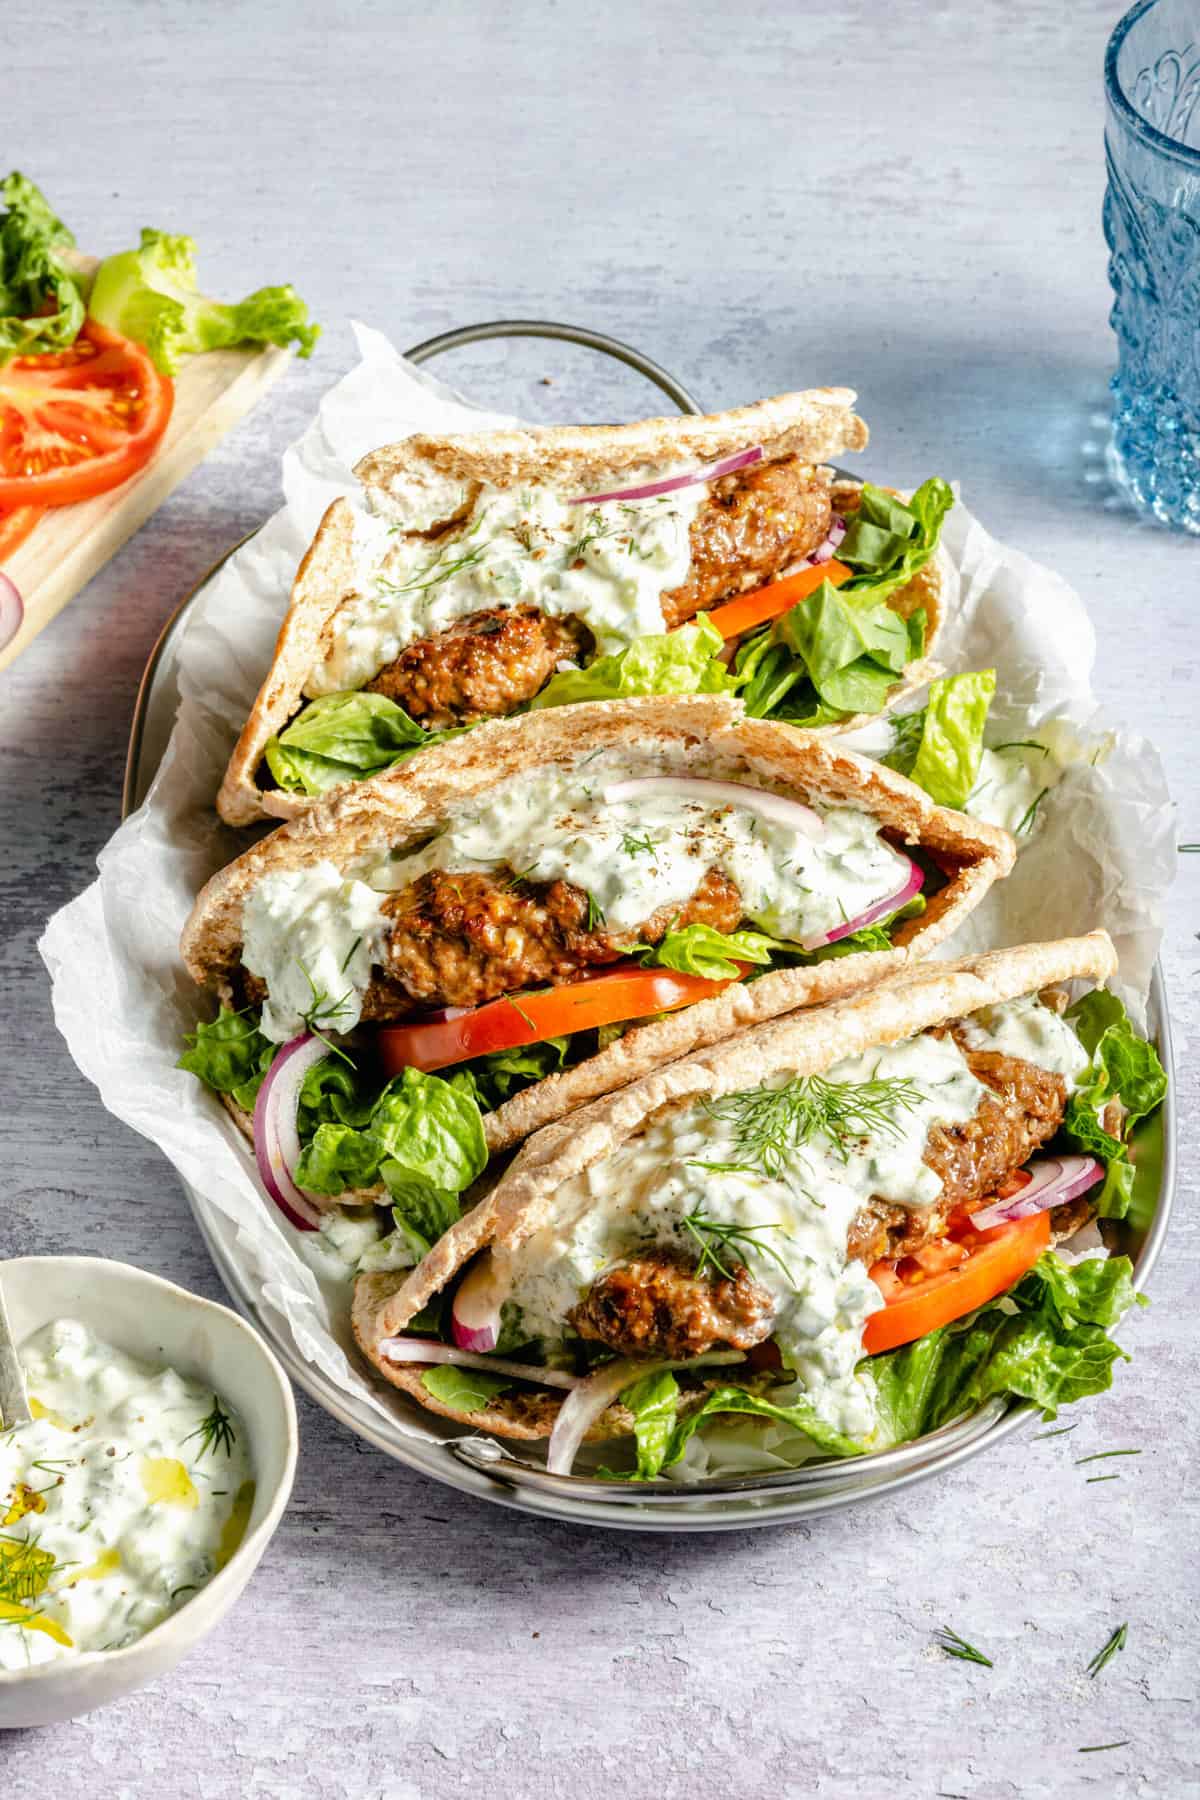 Greek-Inspired Grilled Lamb Burgers